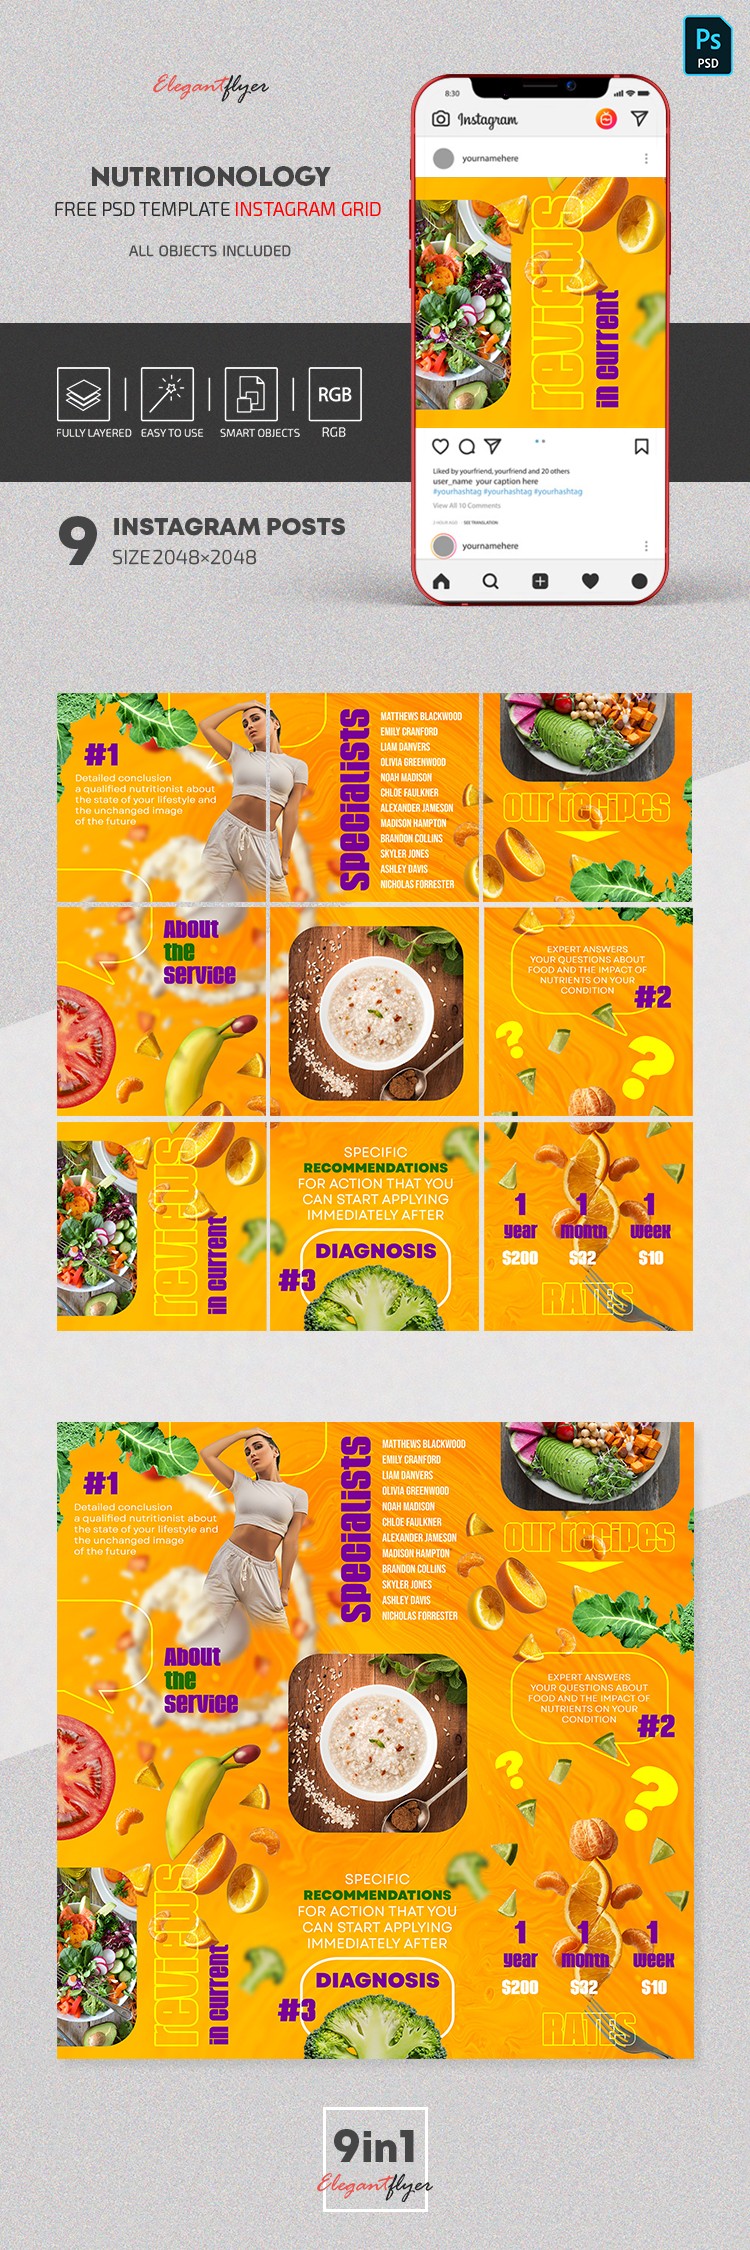 Nutritionology - Free Instagram Grid PSD Template by ElegantFlyer